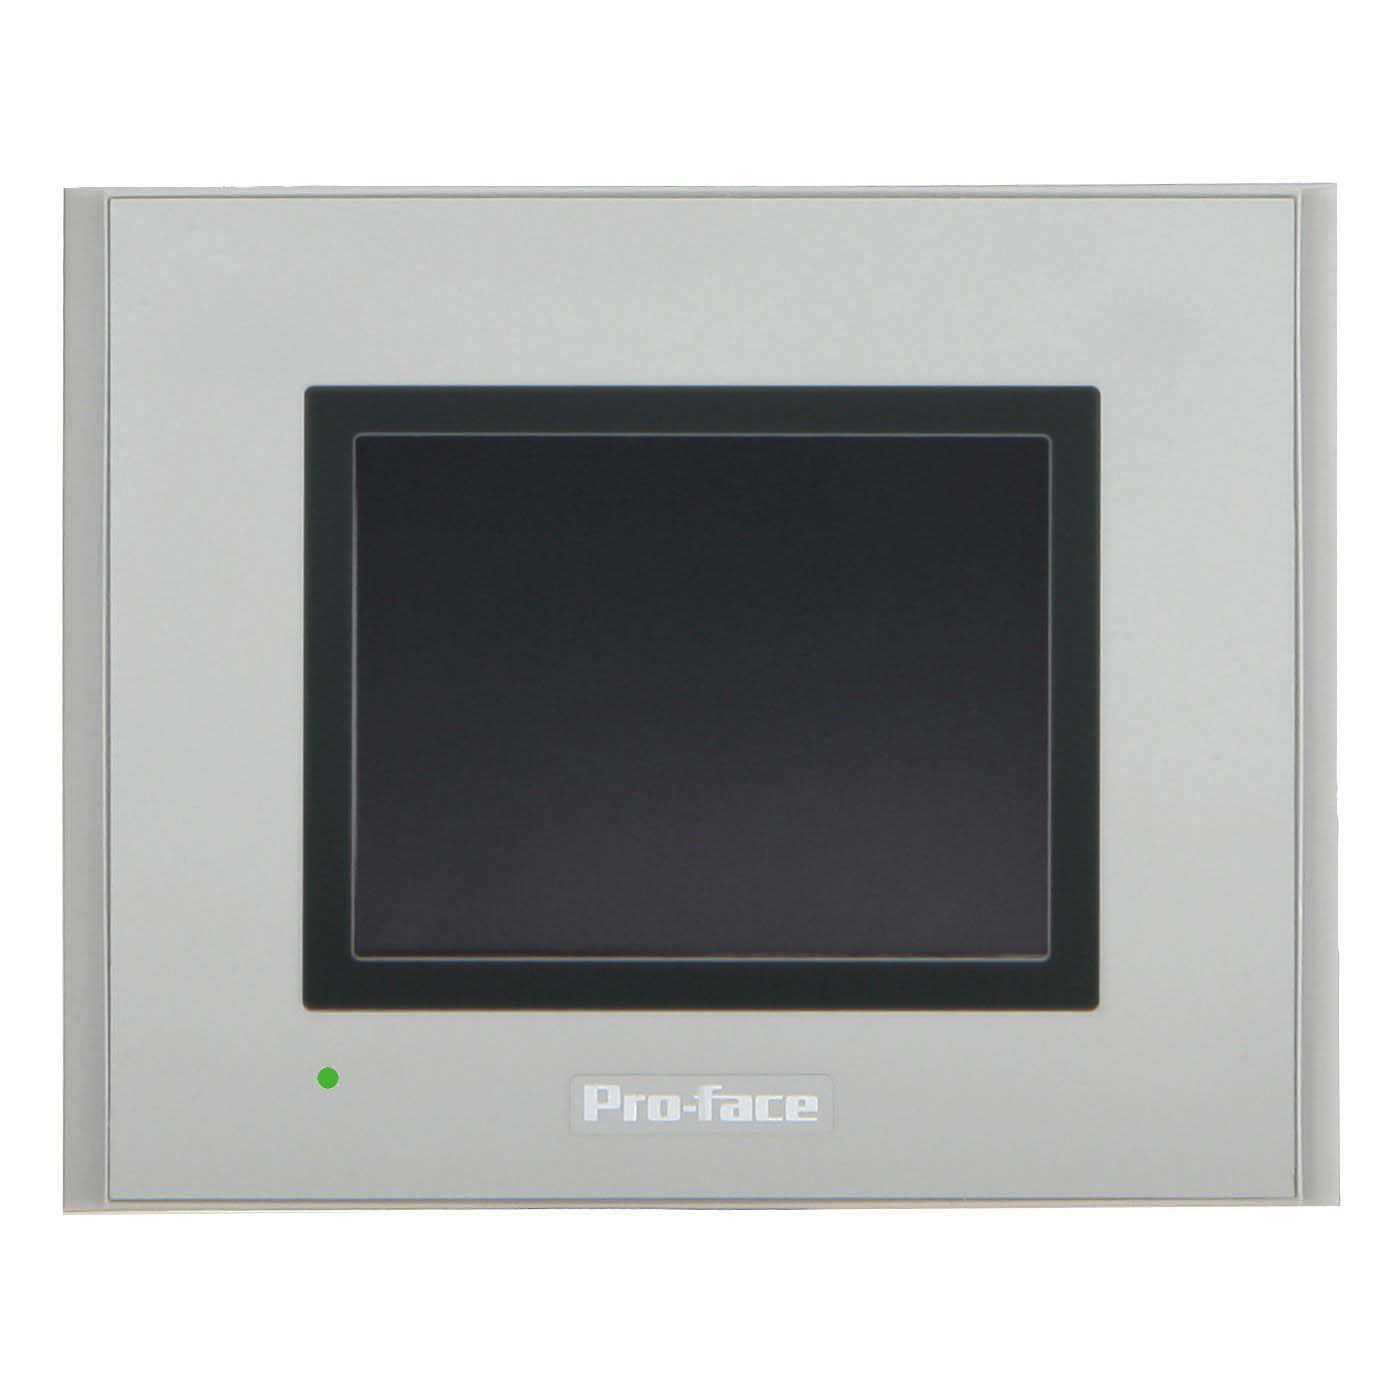 Pro-face GP4000 Farb TFT LCD HMI-Touchscreen, 320 x 240pixels, 132 x 42 x 106 mm